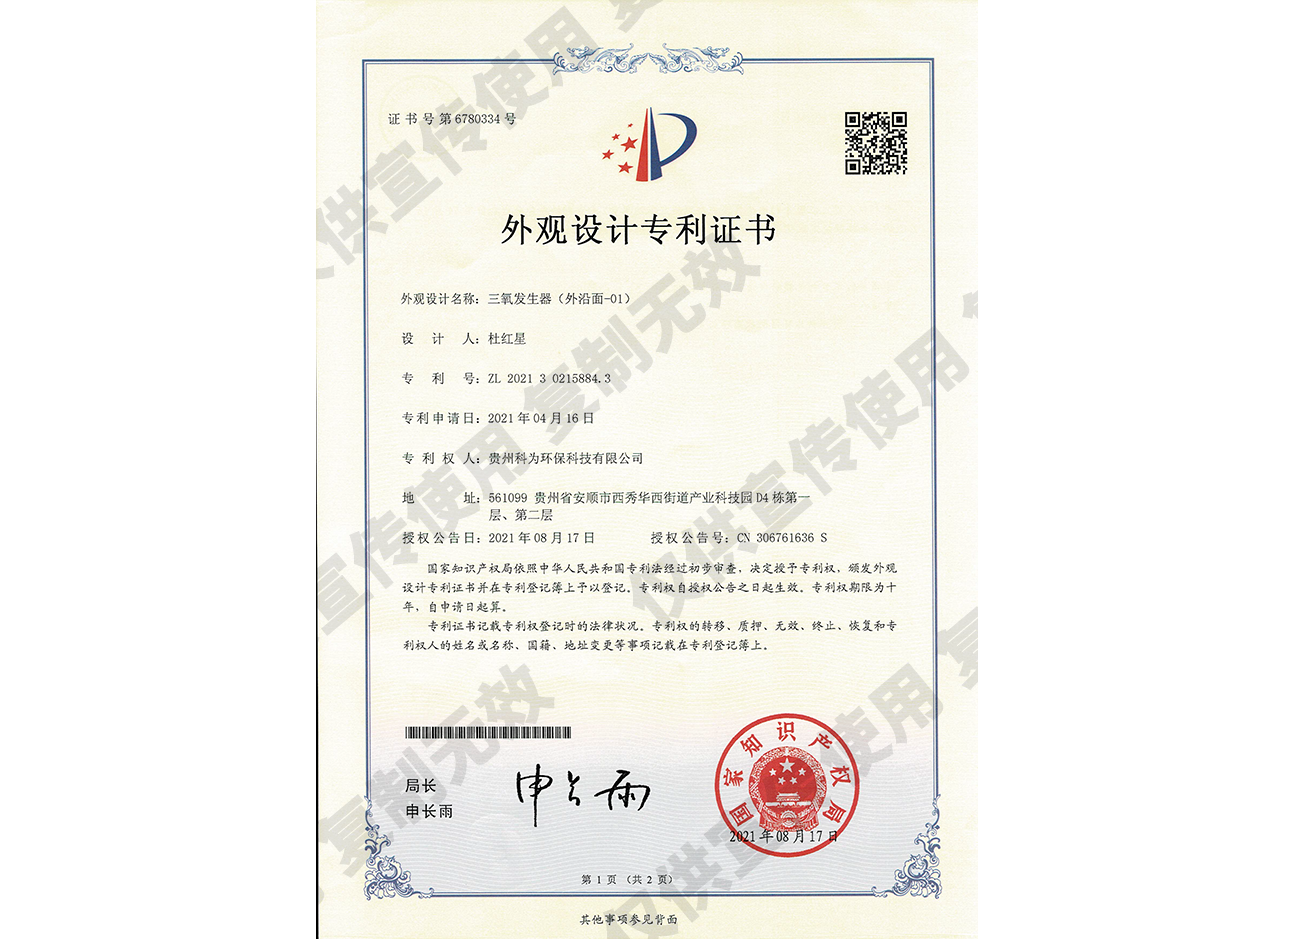 O3 Generator (Dual-air-route) Design Patent Certificate (6780334)